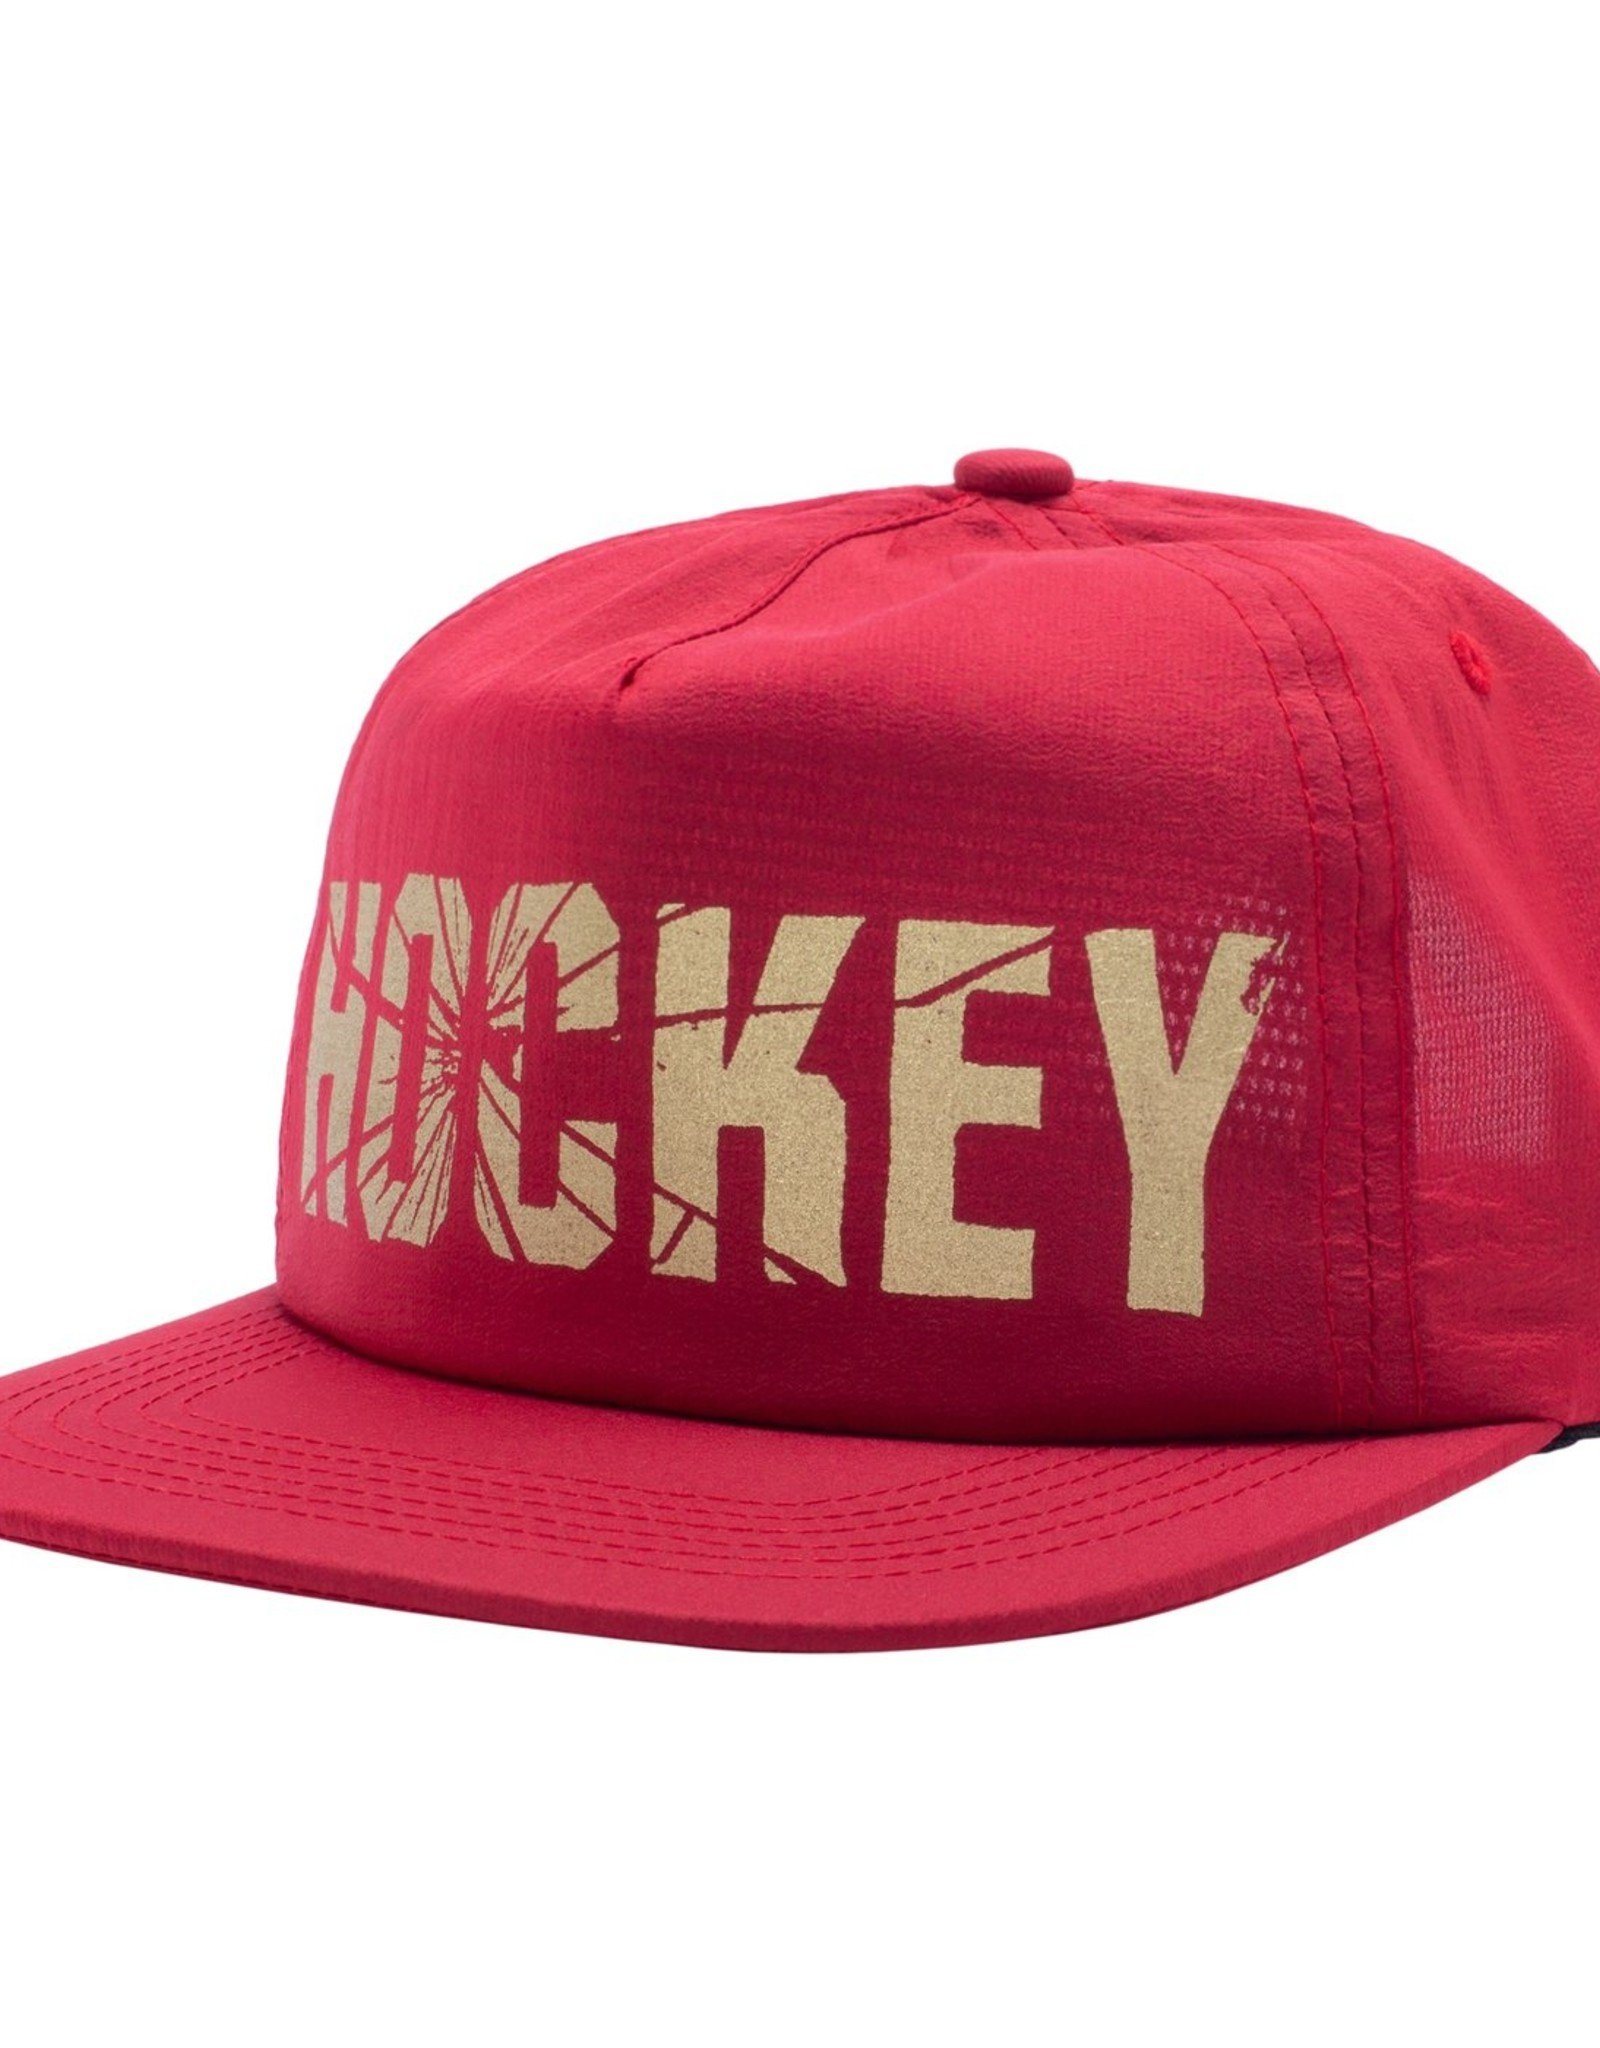 HOCKEY SHATTER NYLON 6-PANEL HAT - RED